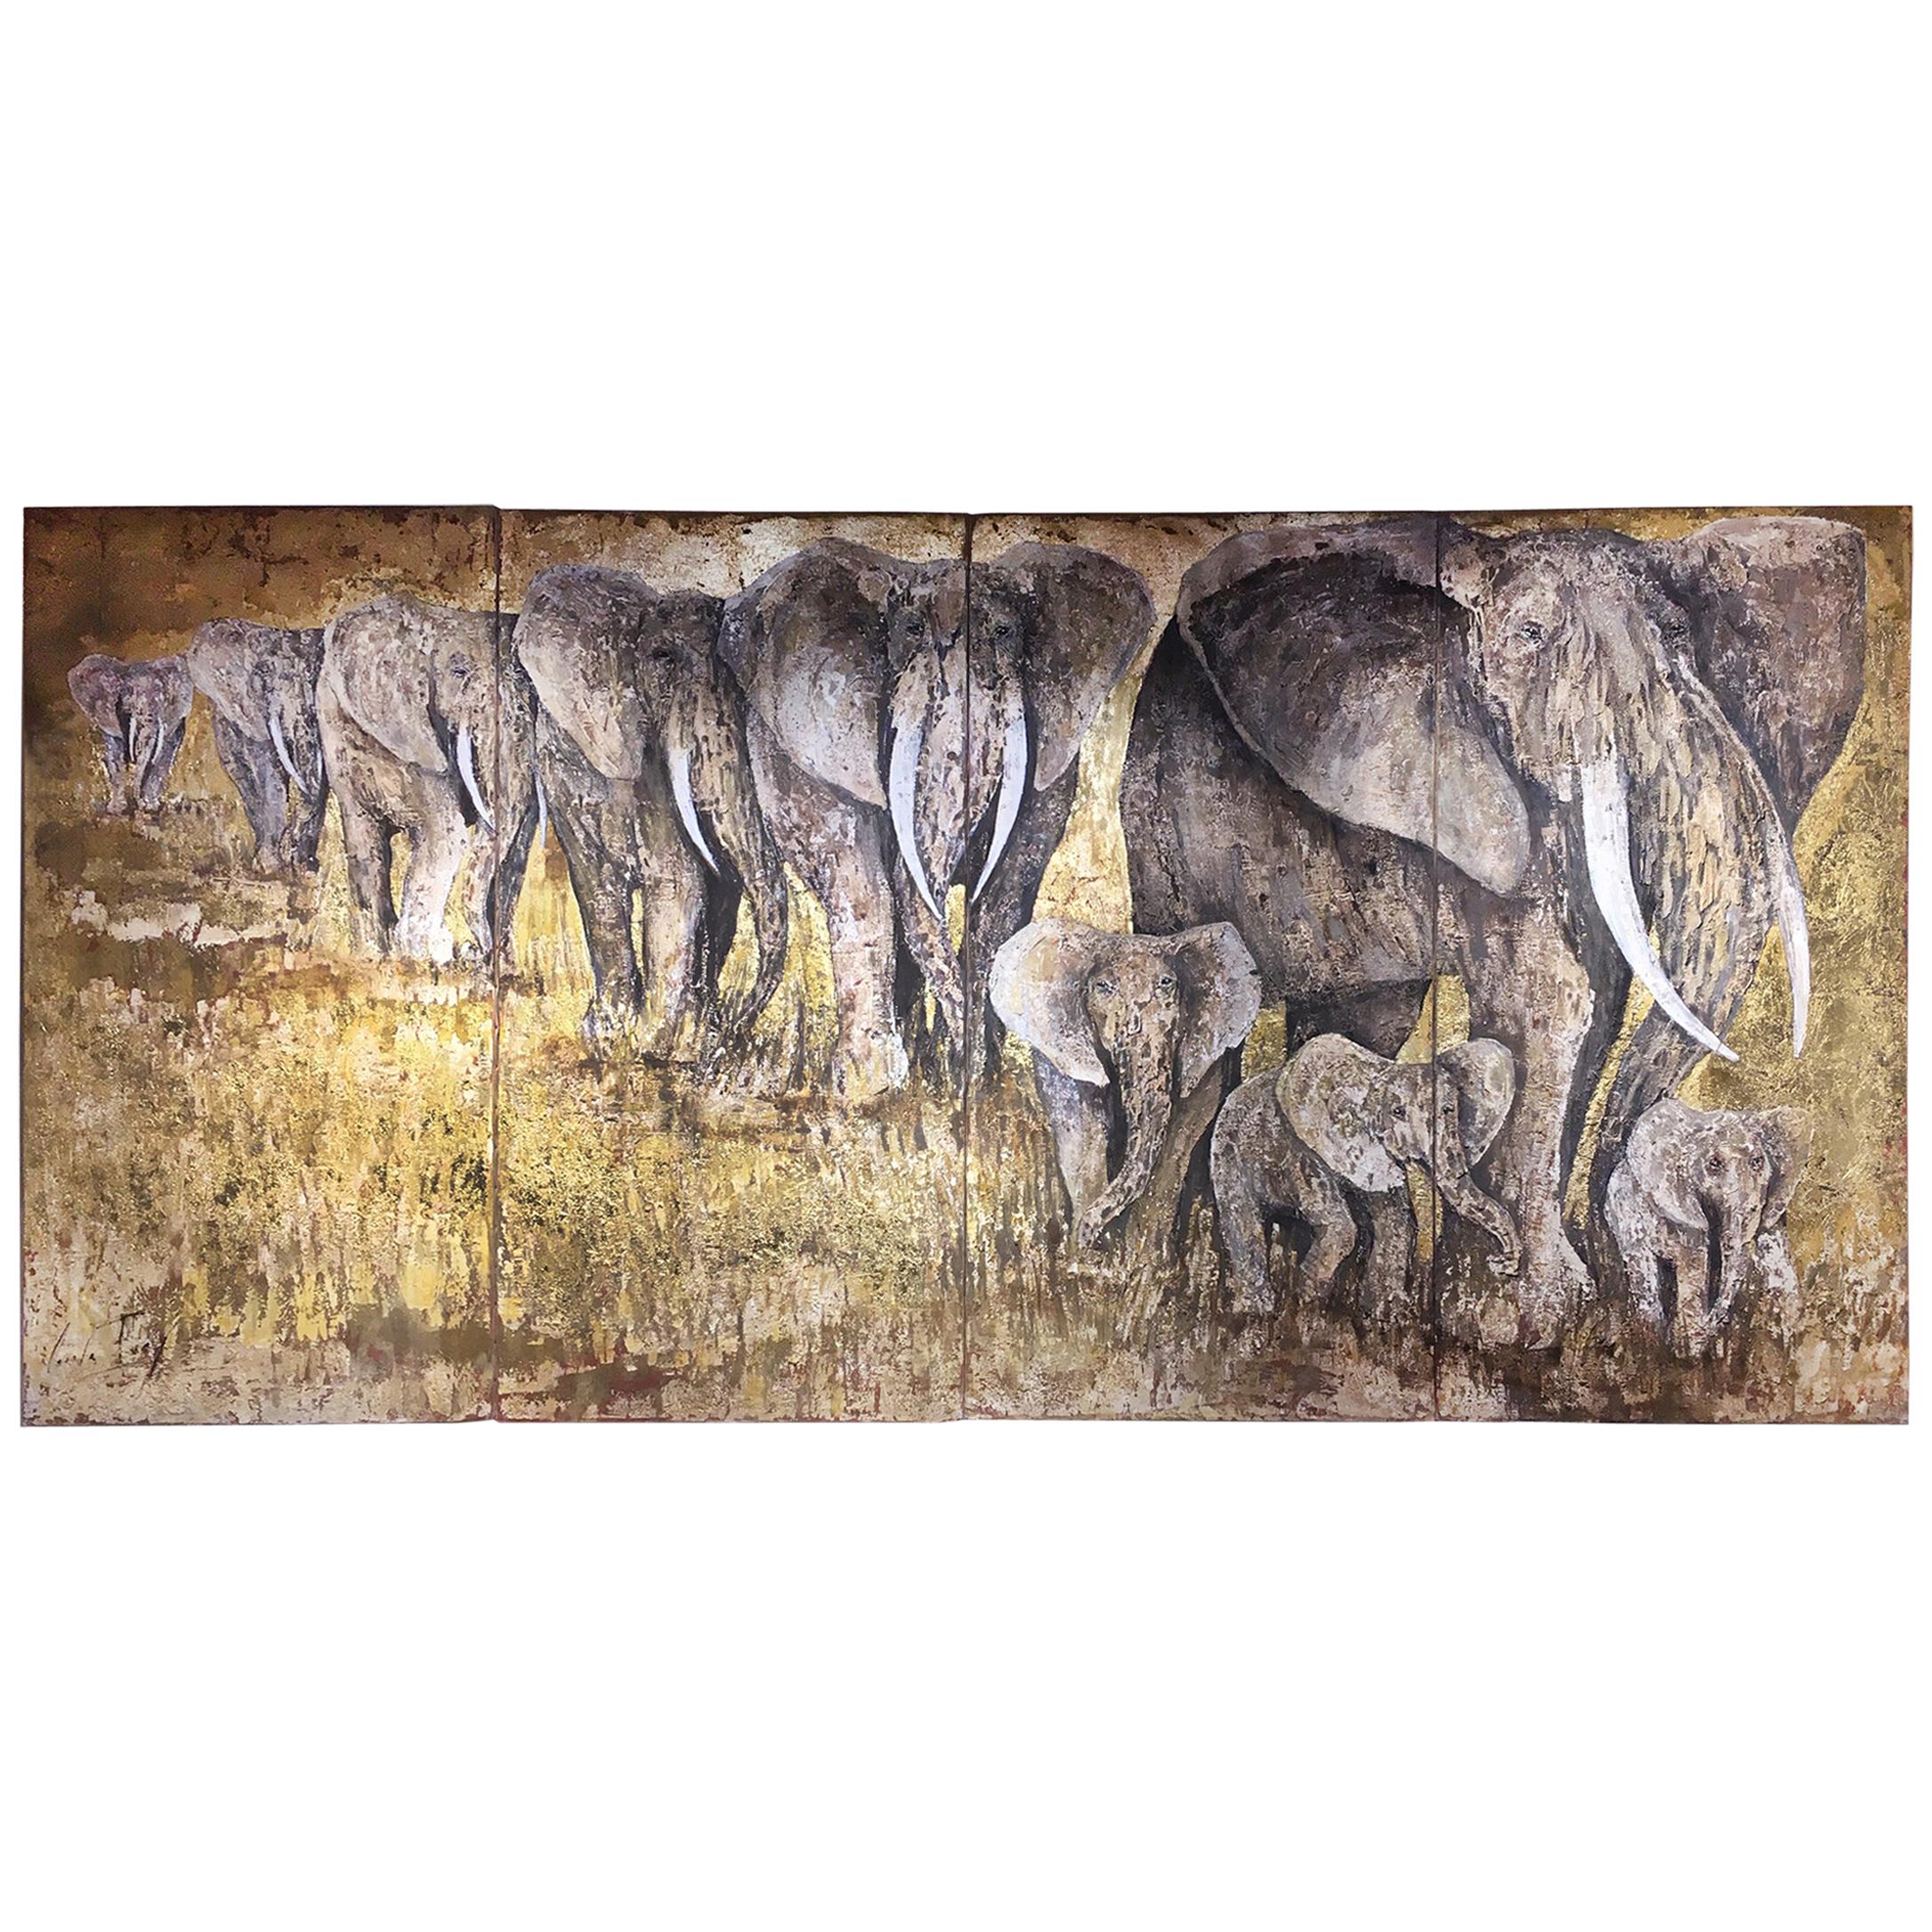 Painting Elephants on 4 Canvas